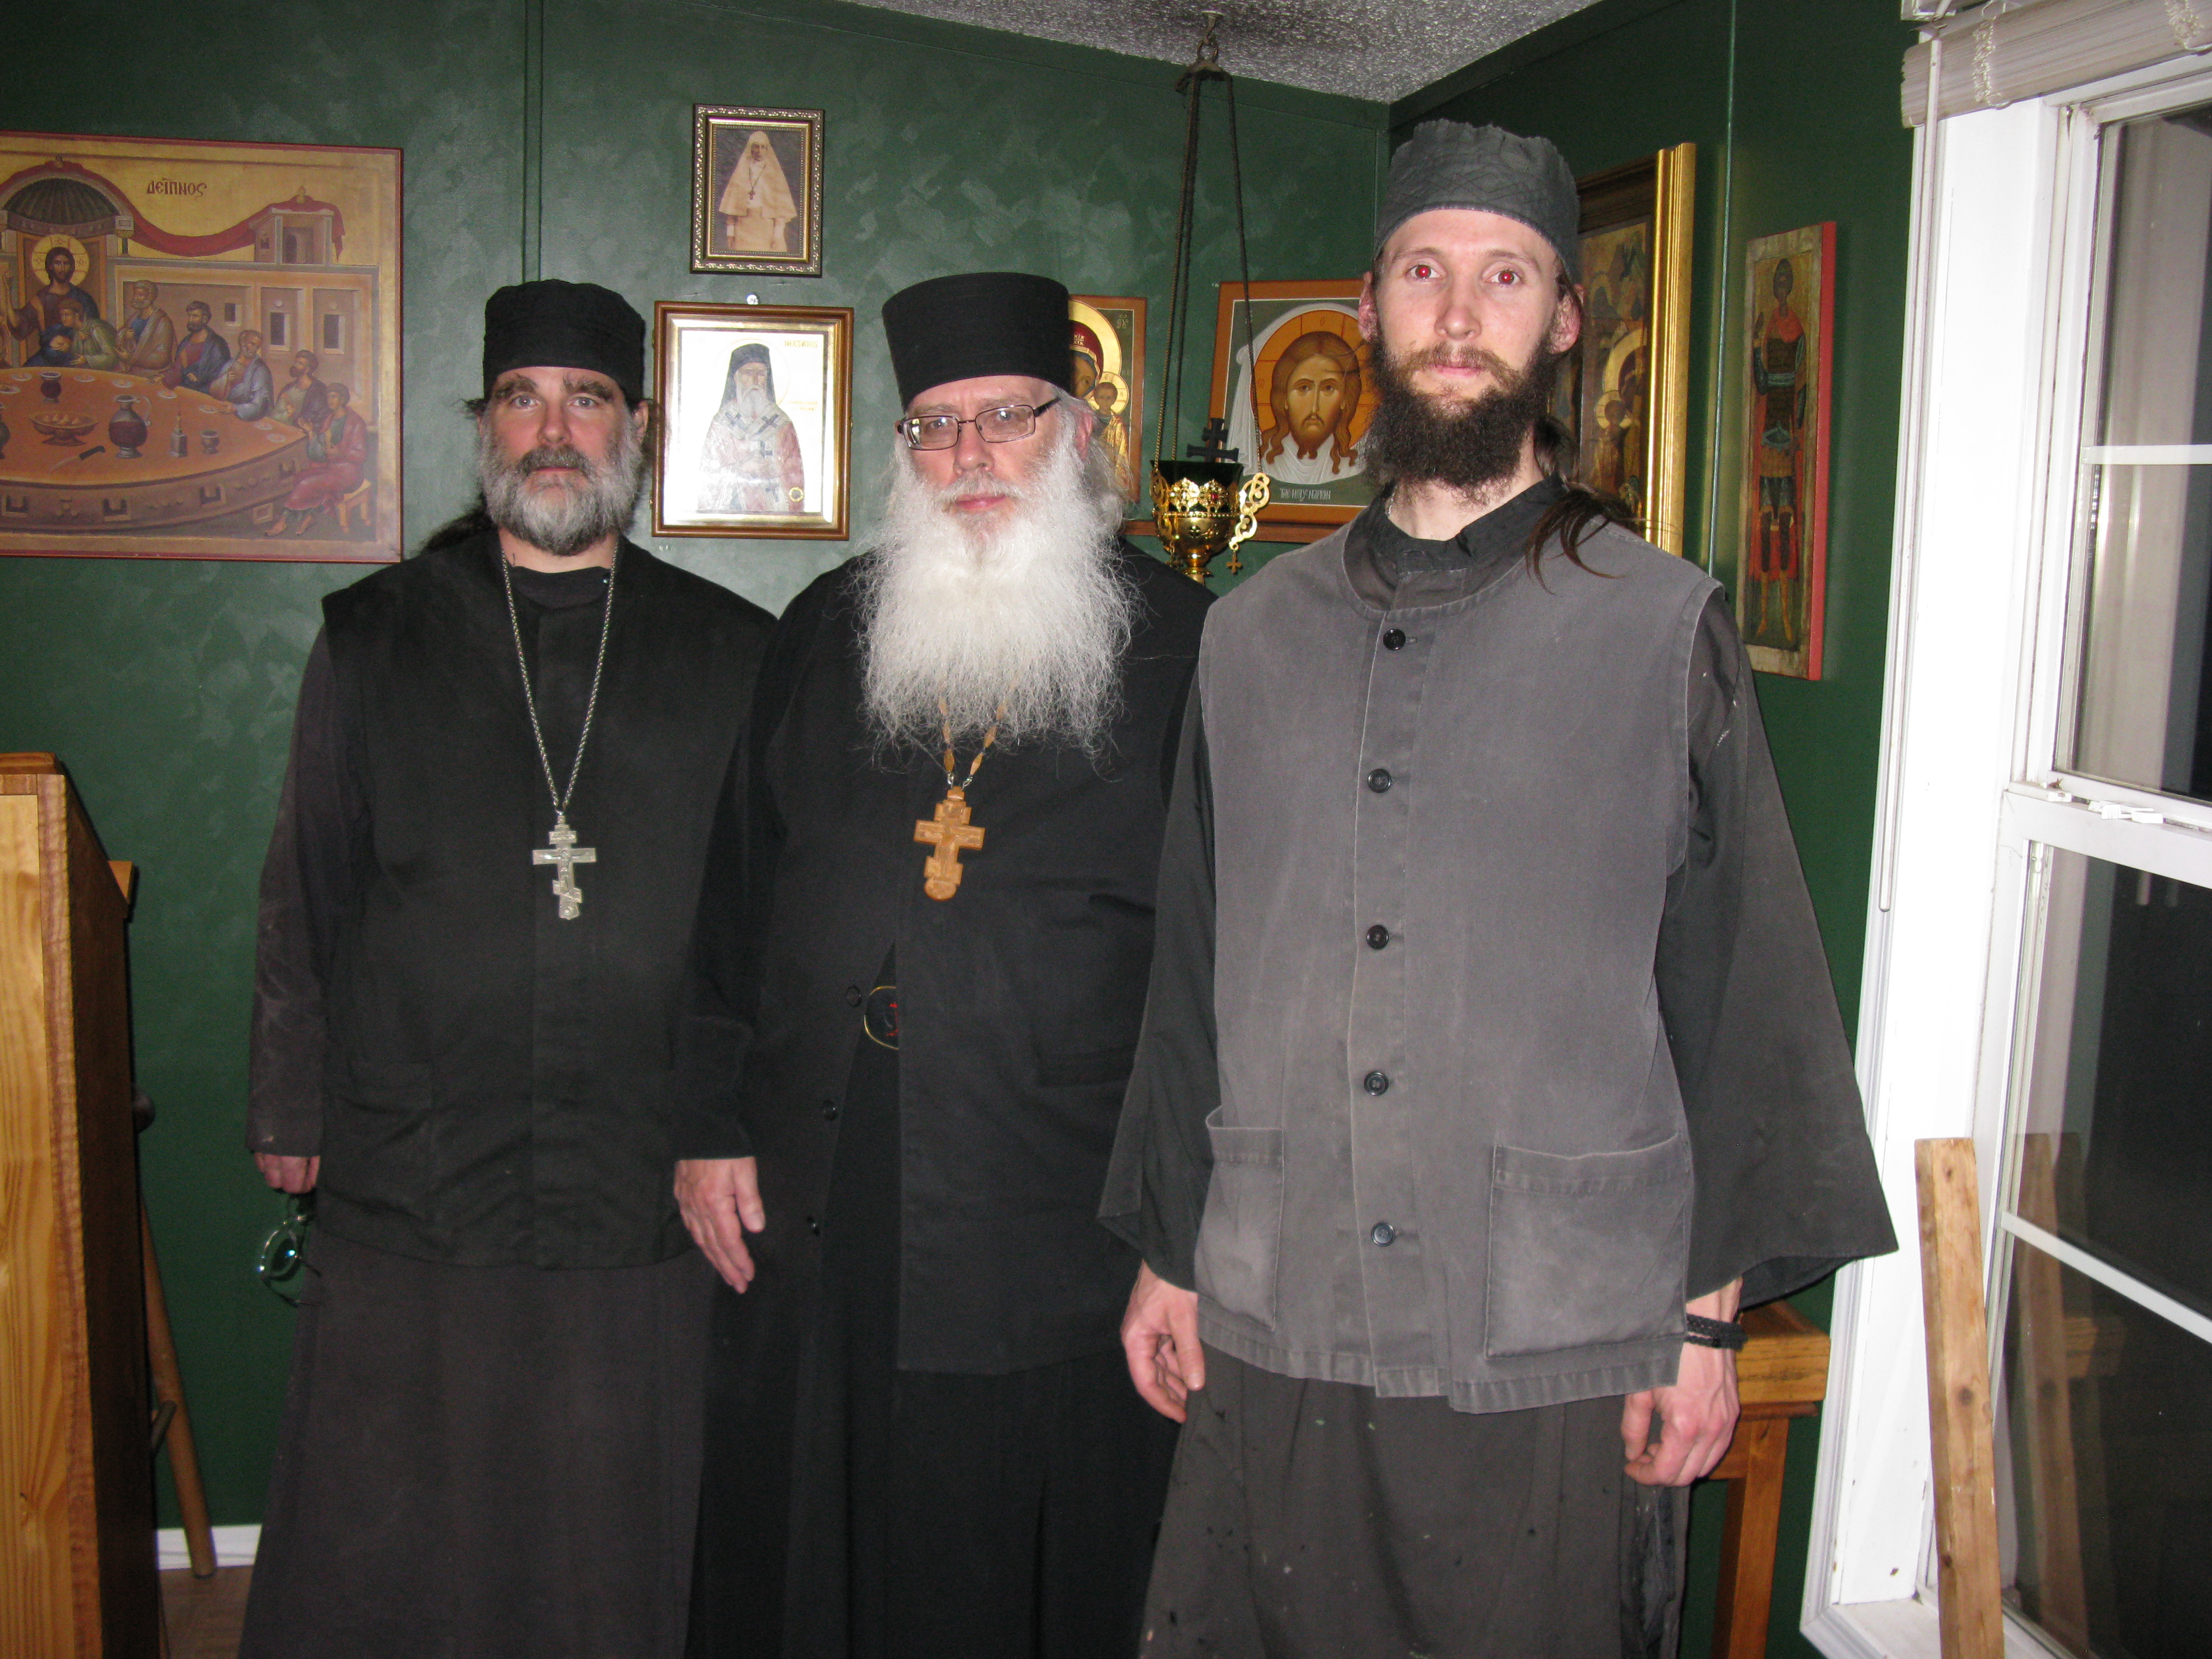 Left to right, Priest Seraphim Holland, Igumen Seraphim, Hierodeacon Sergius in the Monastery Trapeza. https://www.orthodox.net//photos/2011-02-hermitage-of-the-holy-cross/2011-02-hermitage-of-the-holy-cross-retreat-priest-seraphim-igumen-seraphim-hierodeacon-sergius.jpg